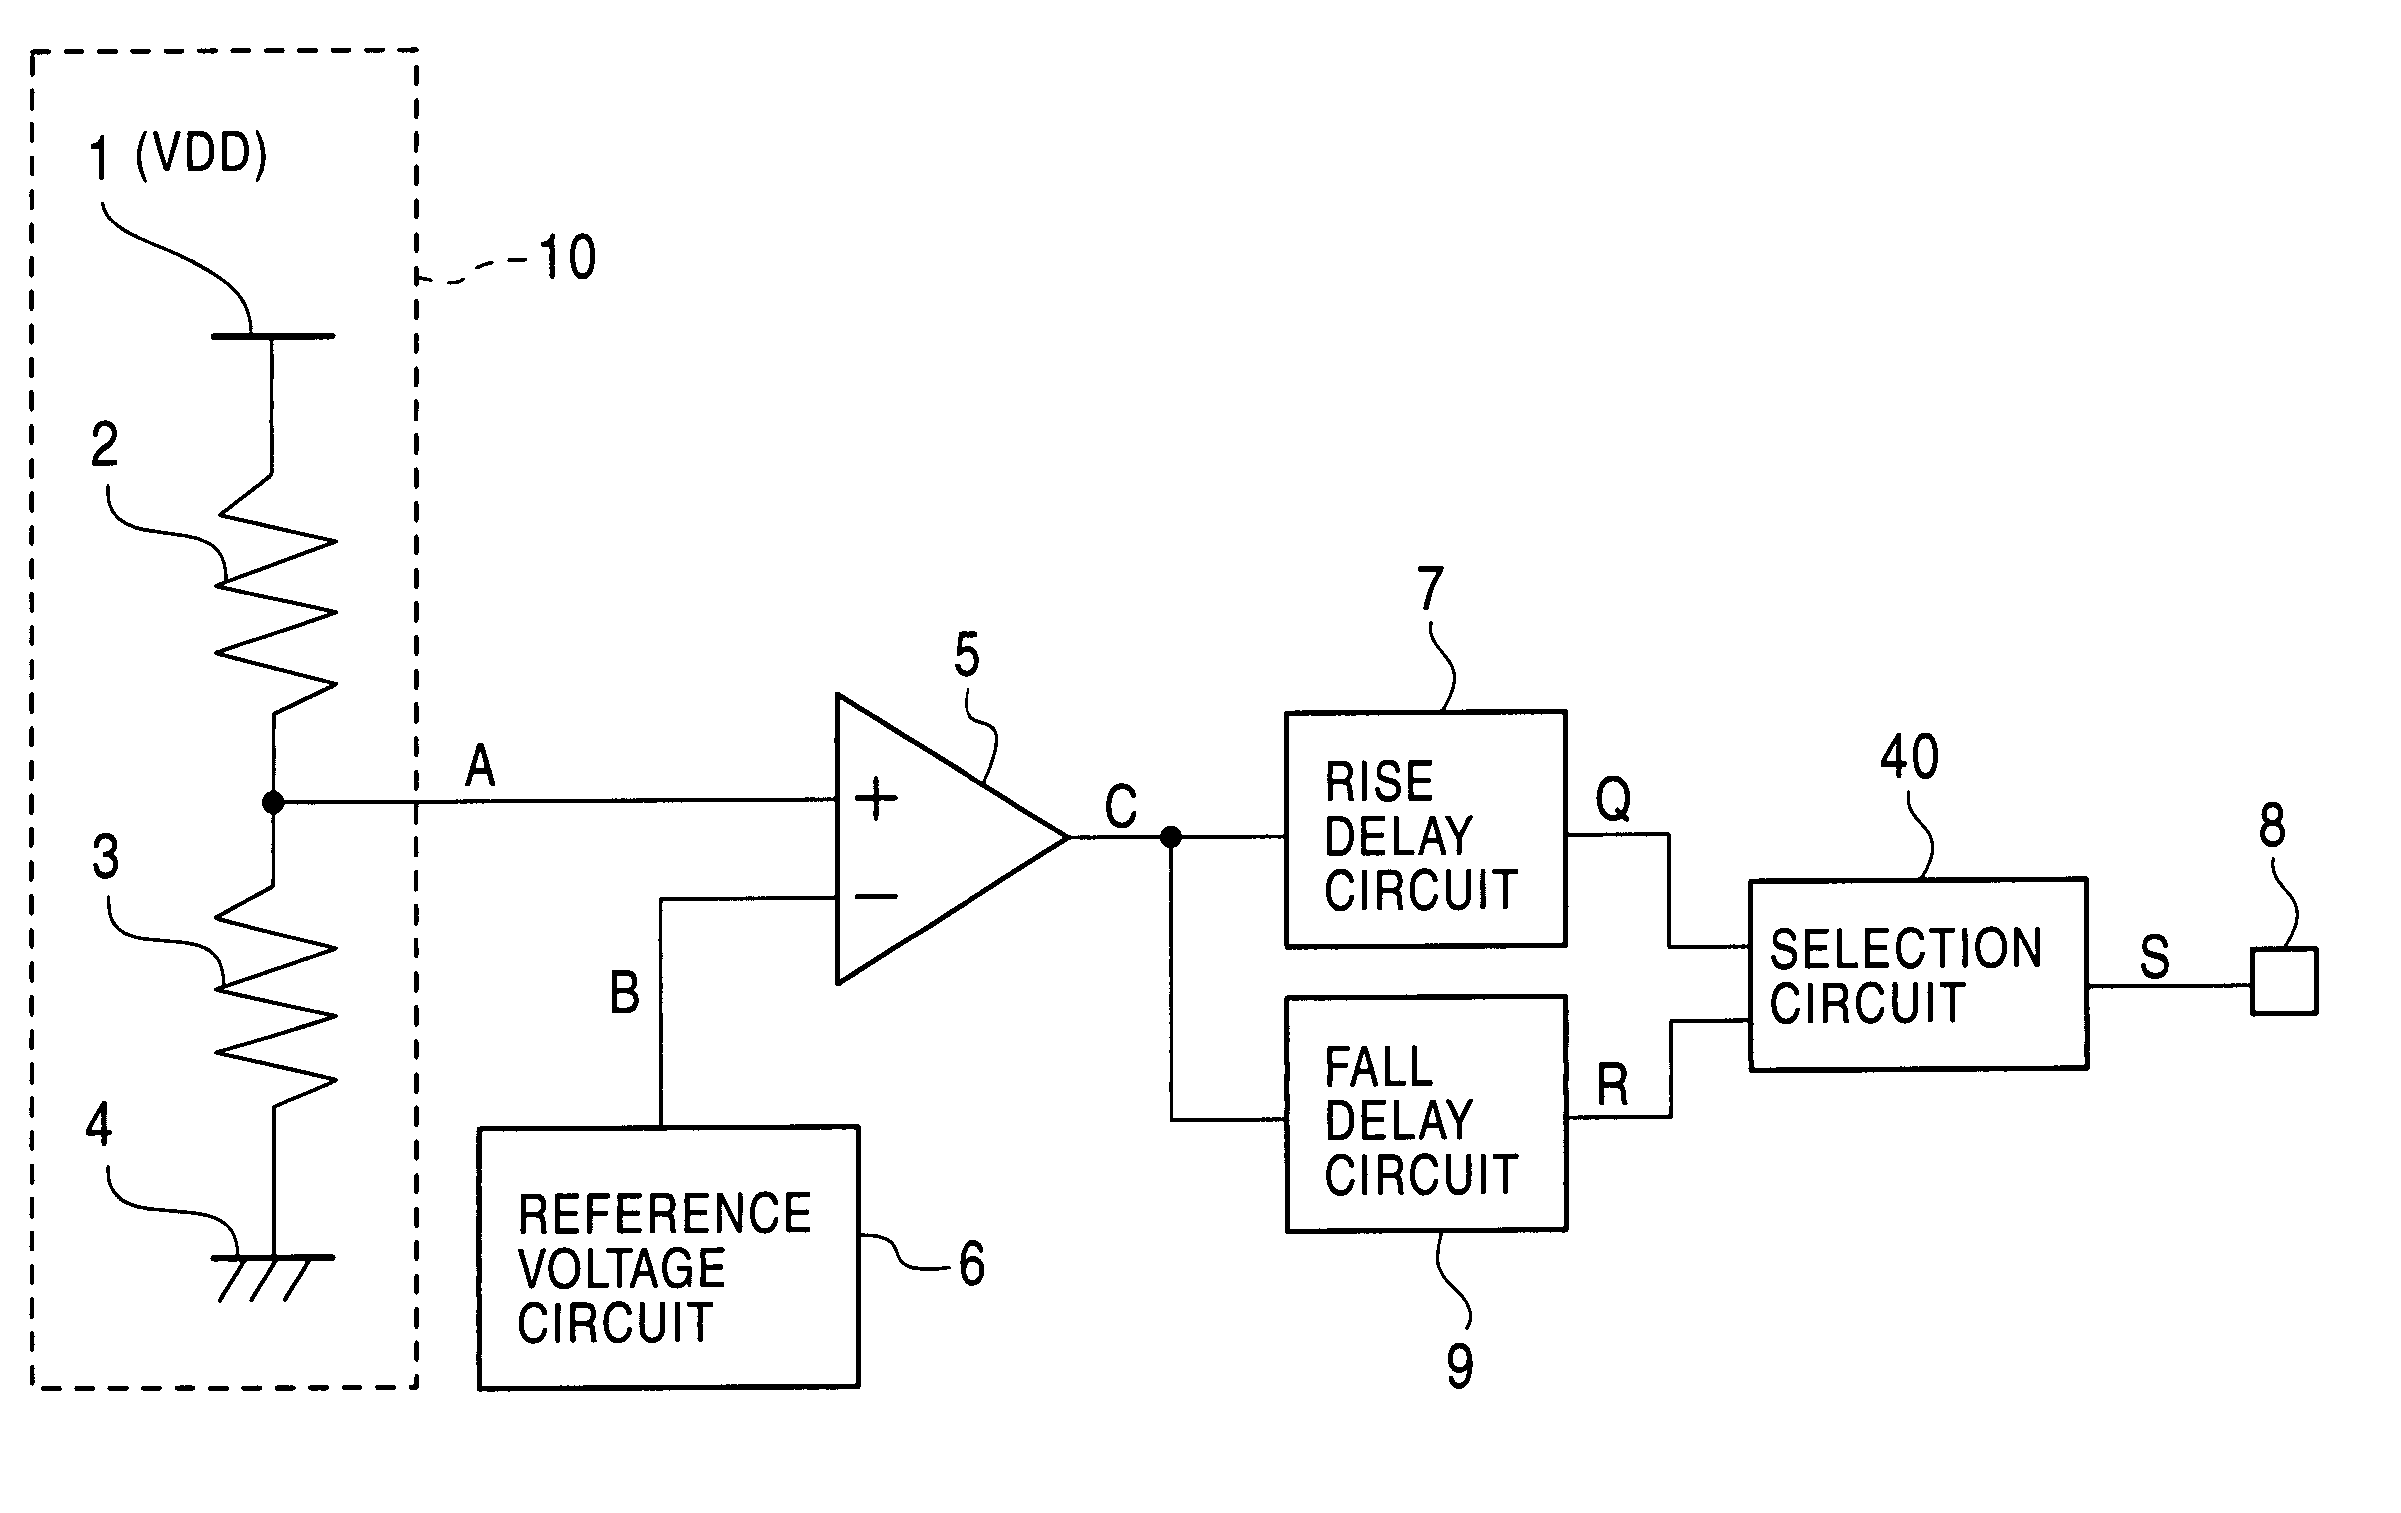 Reset circuit